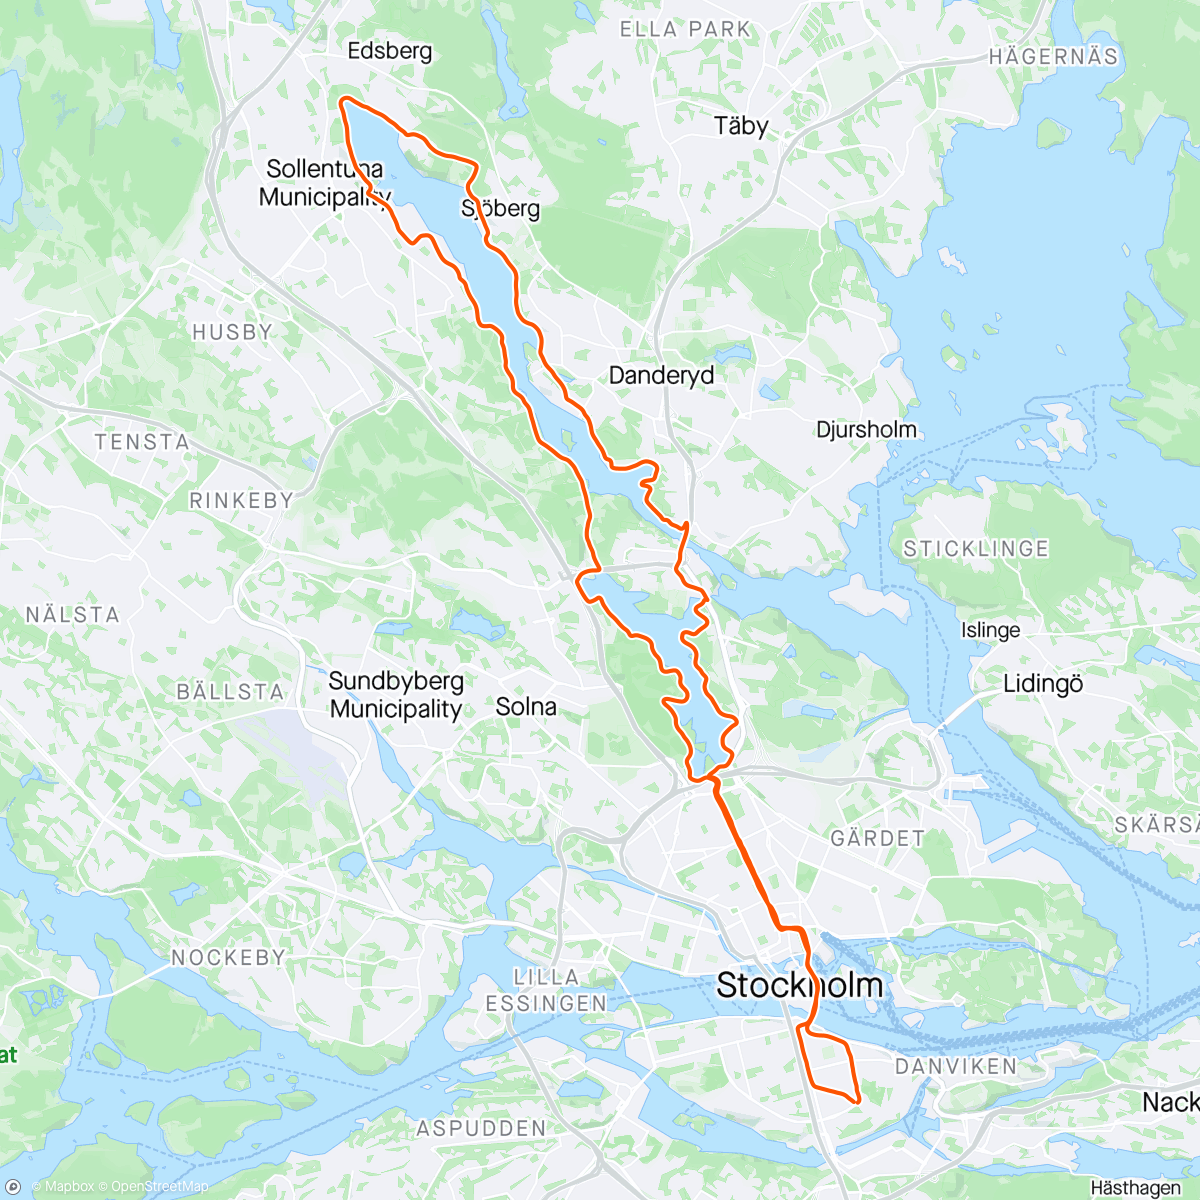 Mapa de la actividad (Edsviken runt)